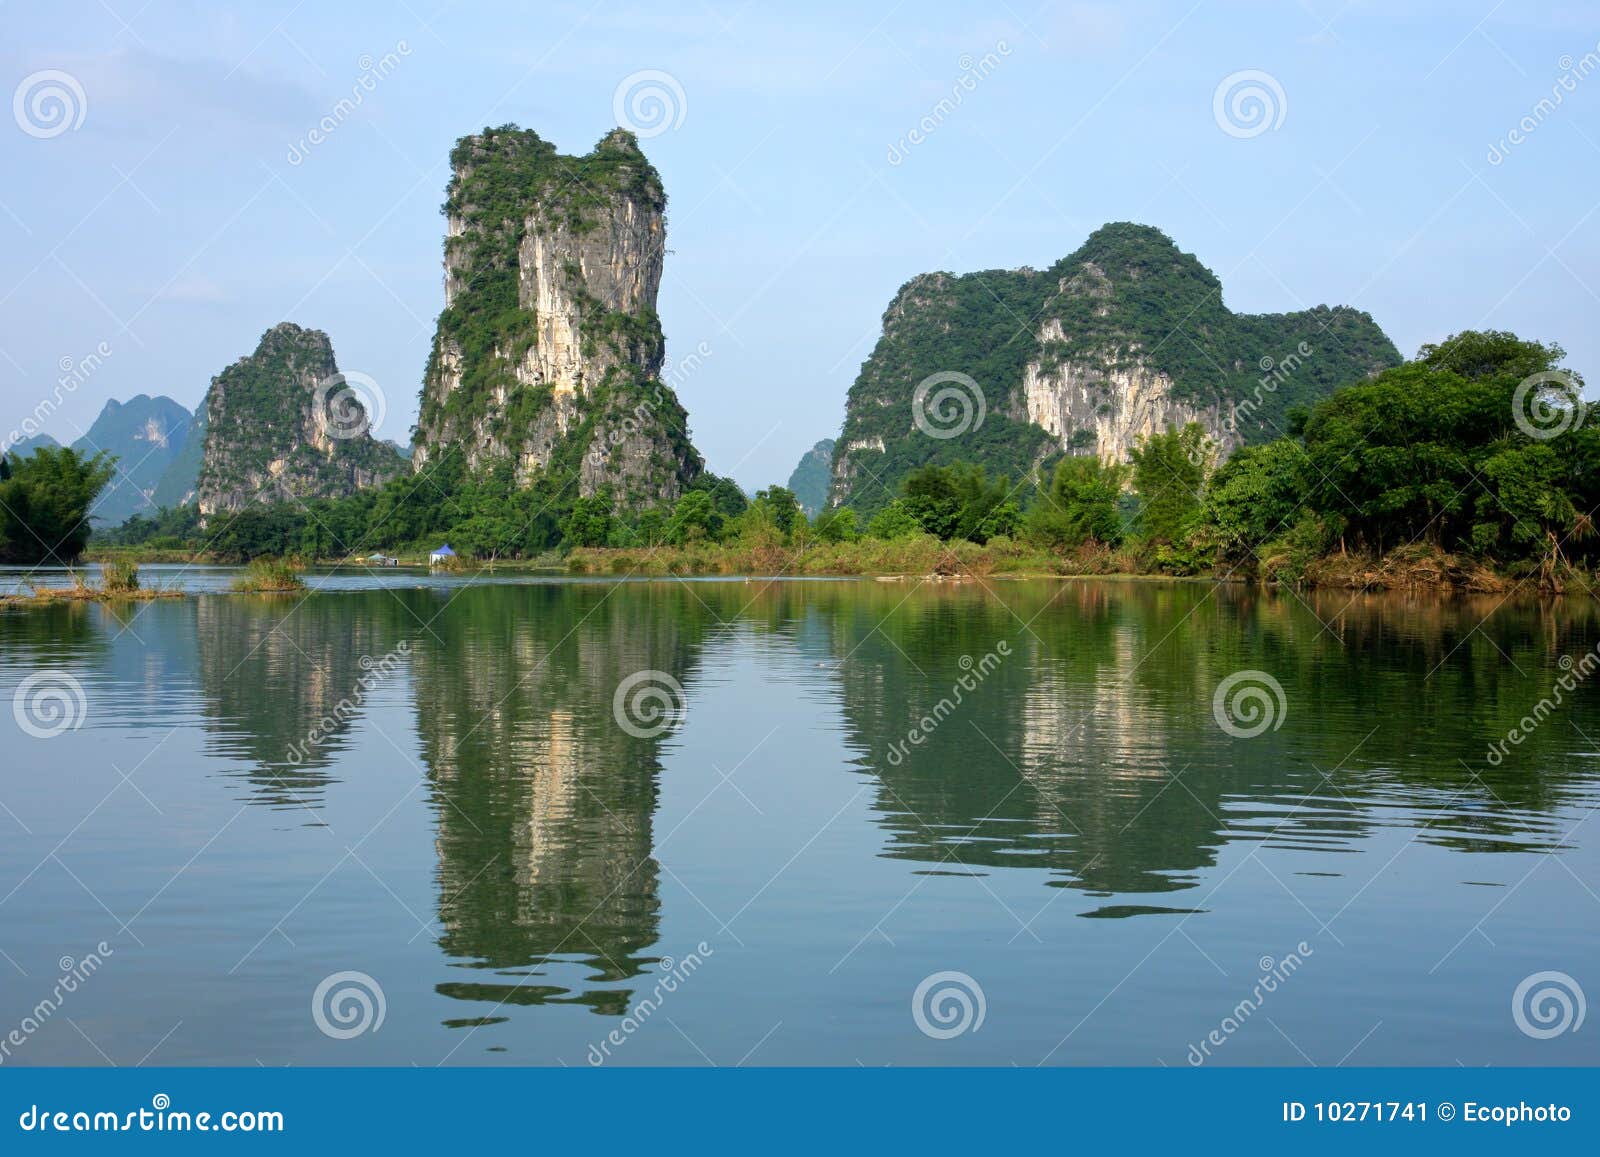 limestone hills, li-river, yangshou, china